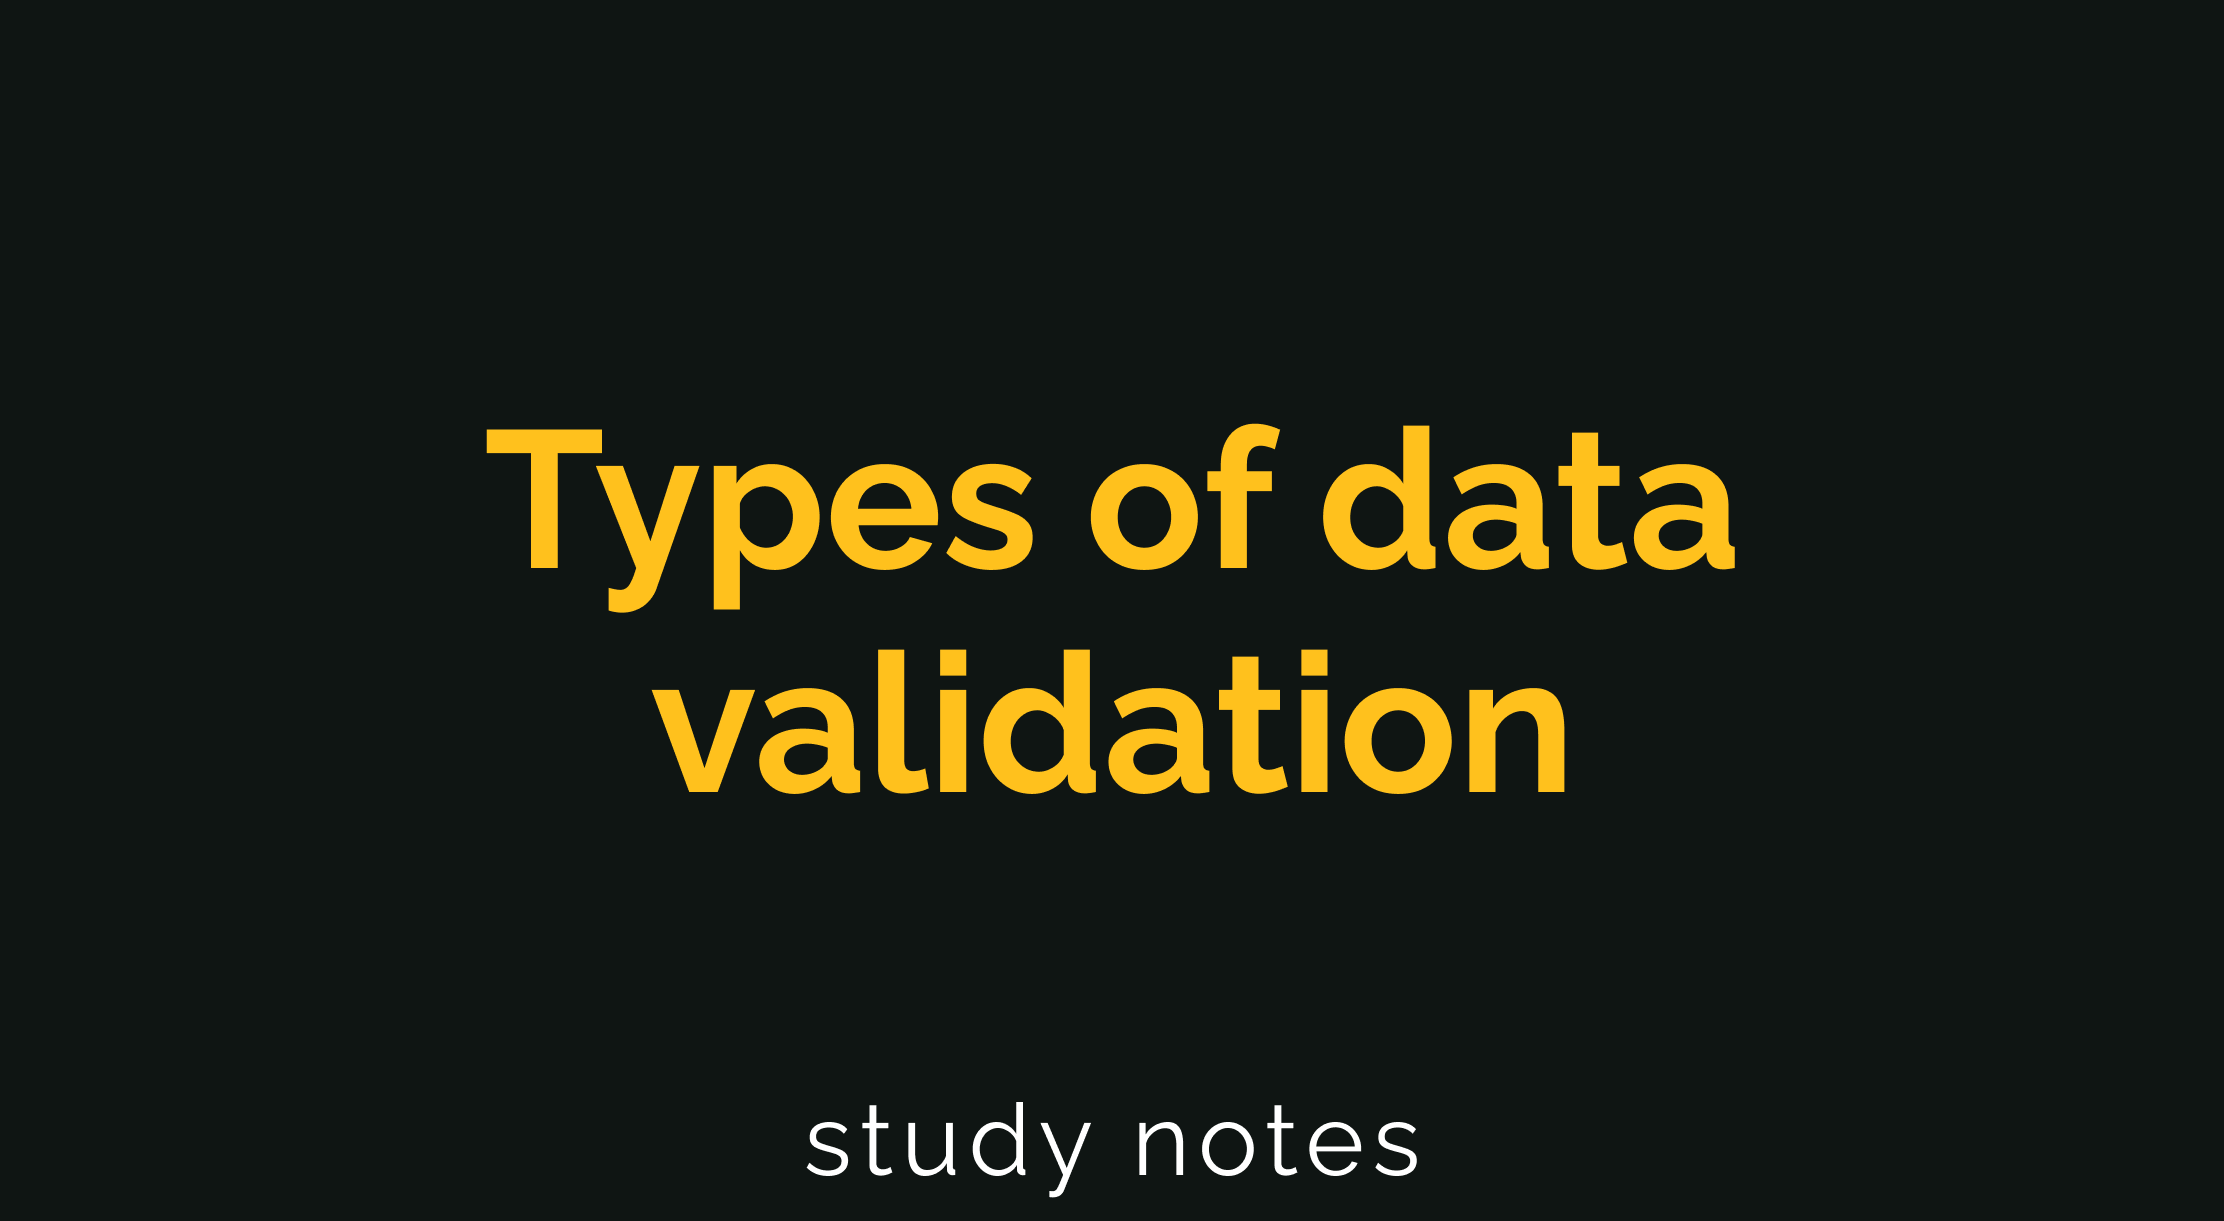 Types of data validation